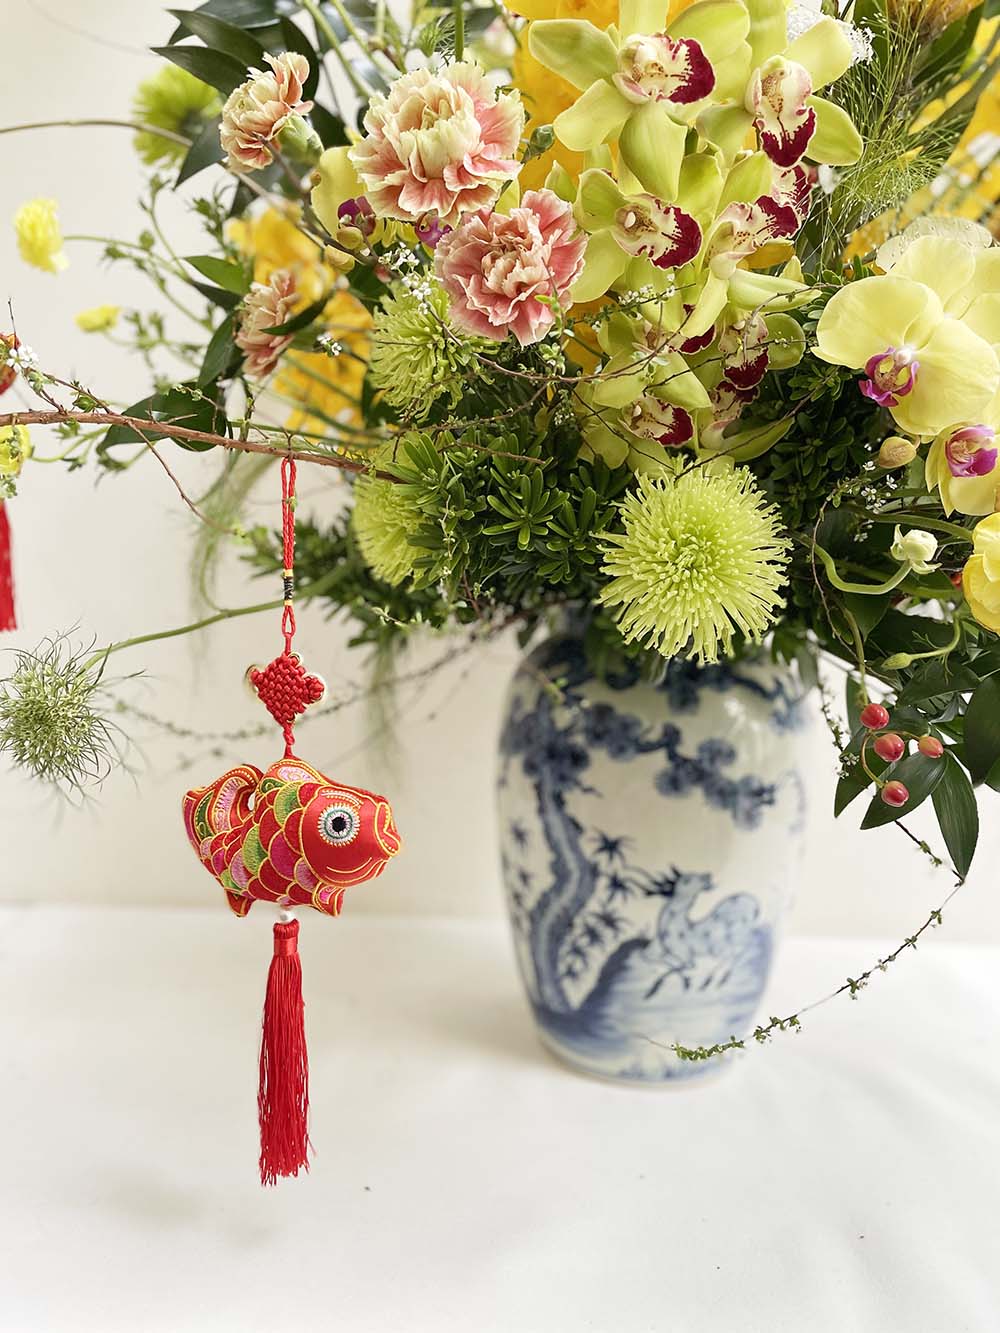 Lunar New Year Flower Arrangement “Joy”